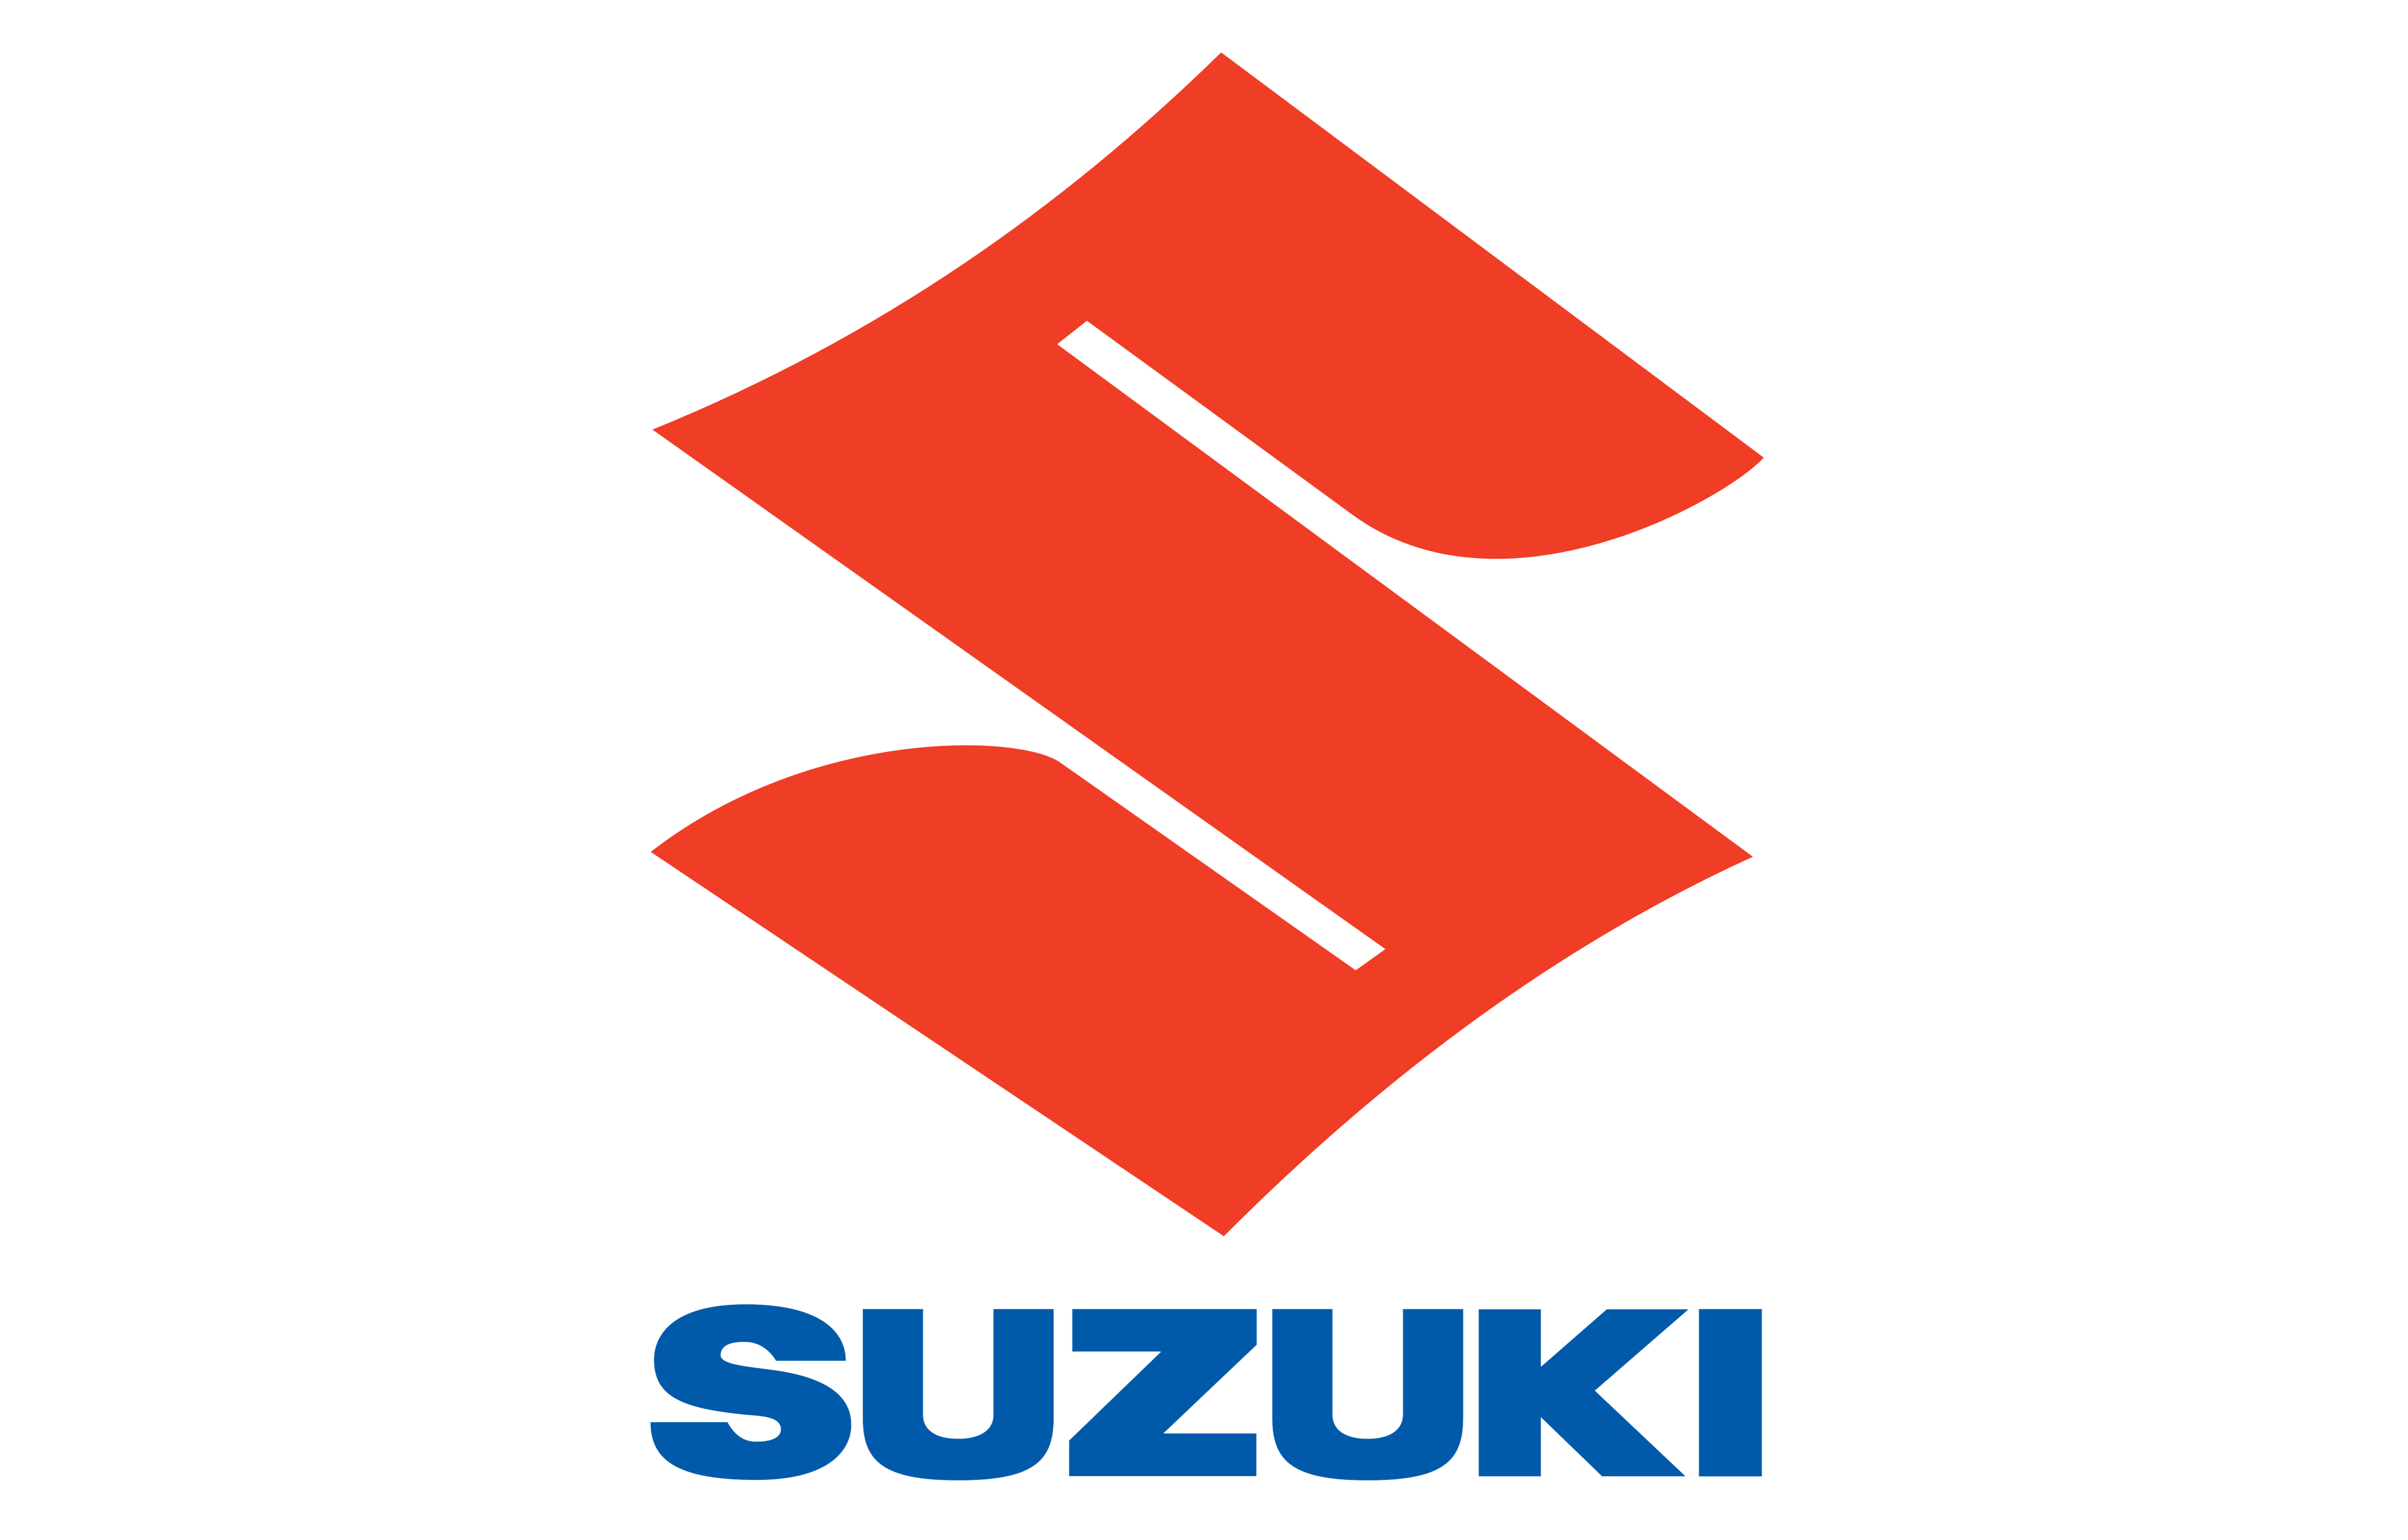 Suzuki car logo editorial stock photo. Image of motor - 76868653